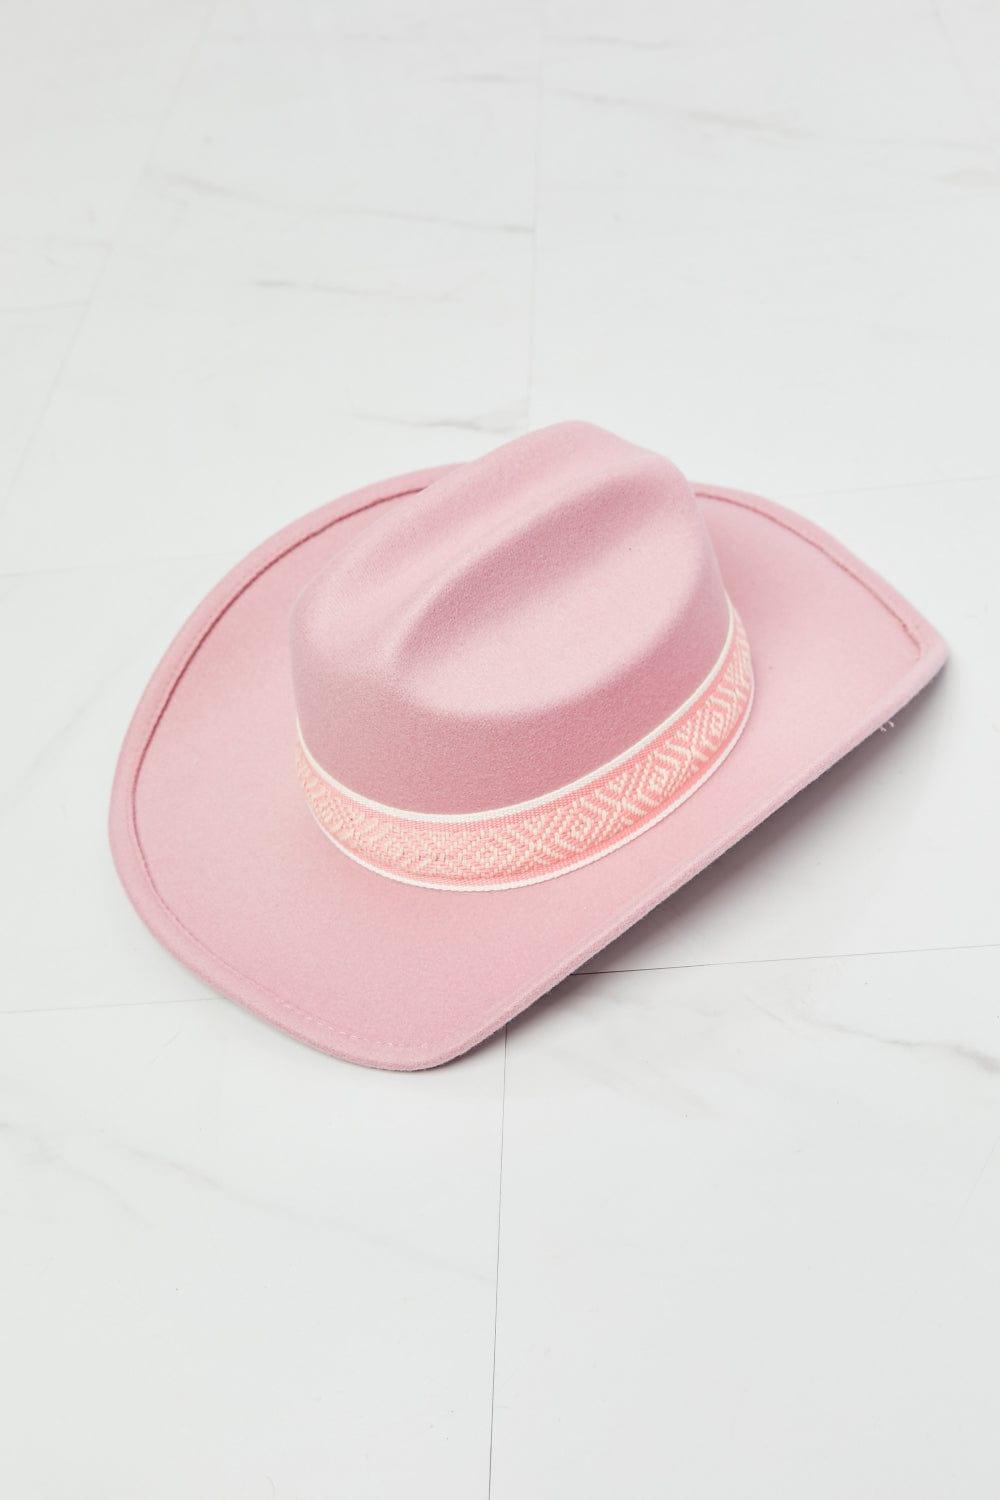 Trendsi Blush Pink / One Size Fame Western Cutie Cowboy Hat in Pink